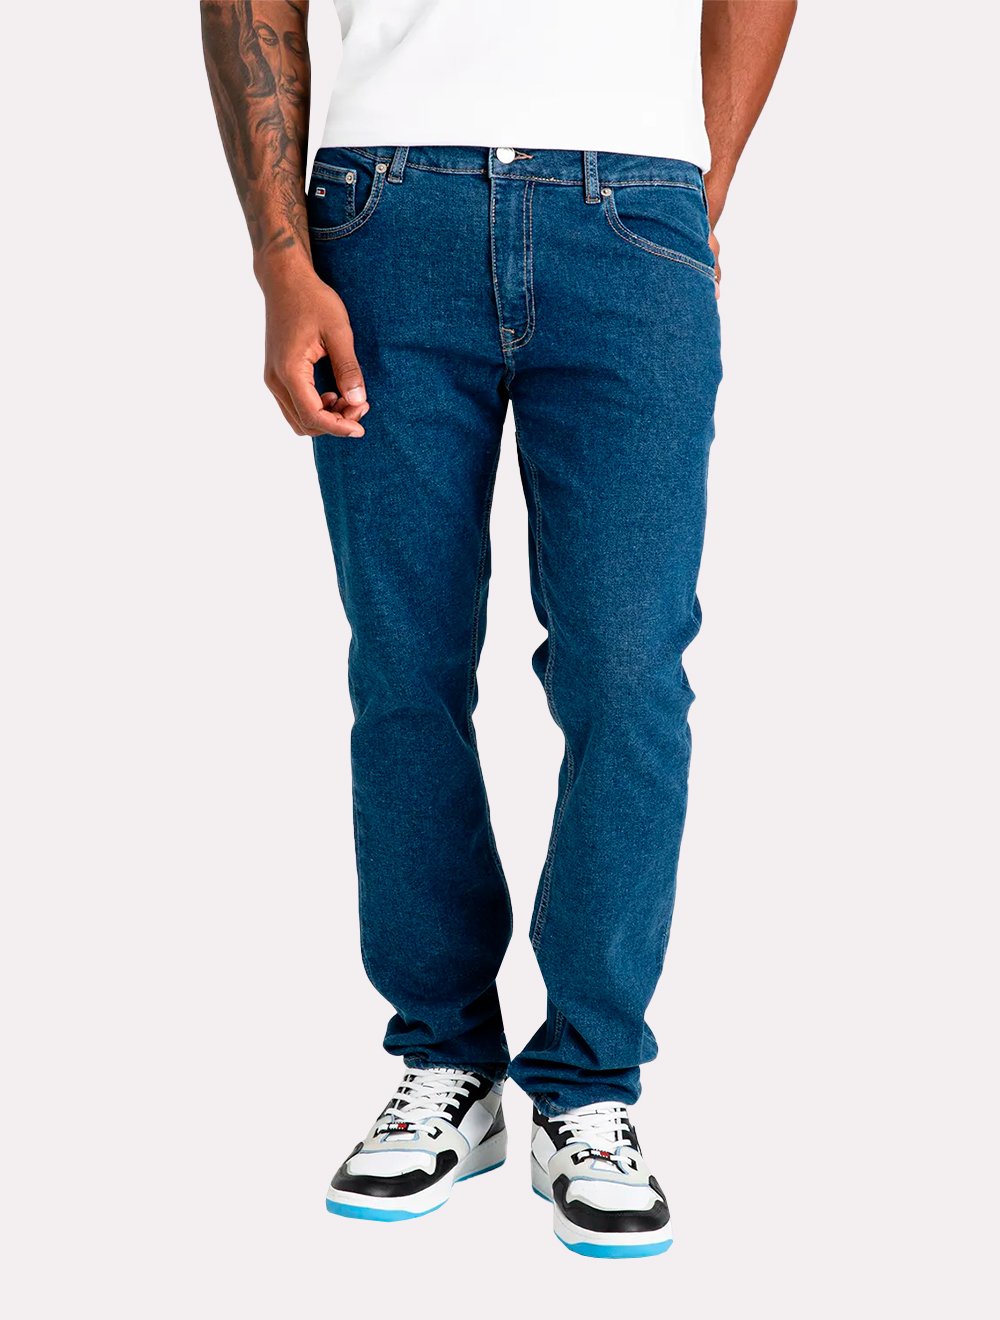 Calça Tommy Jeans Masculina Slim Scanton Azul Médio